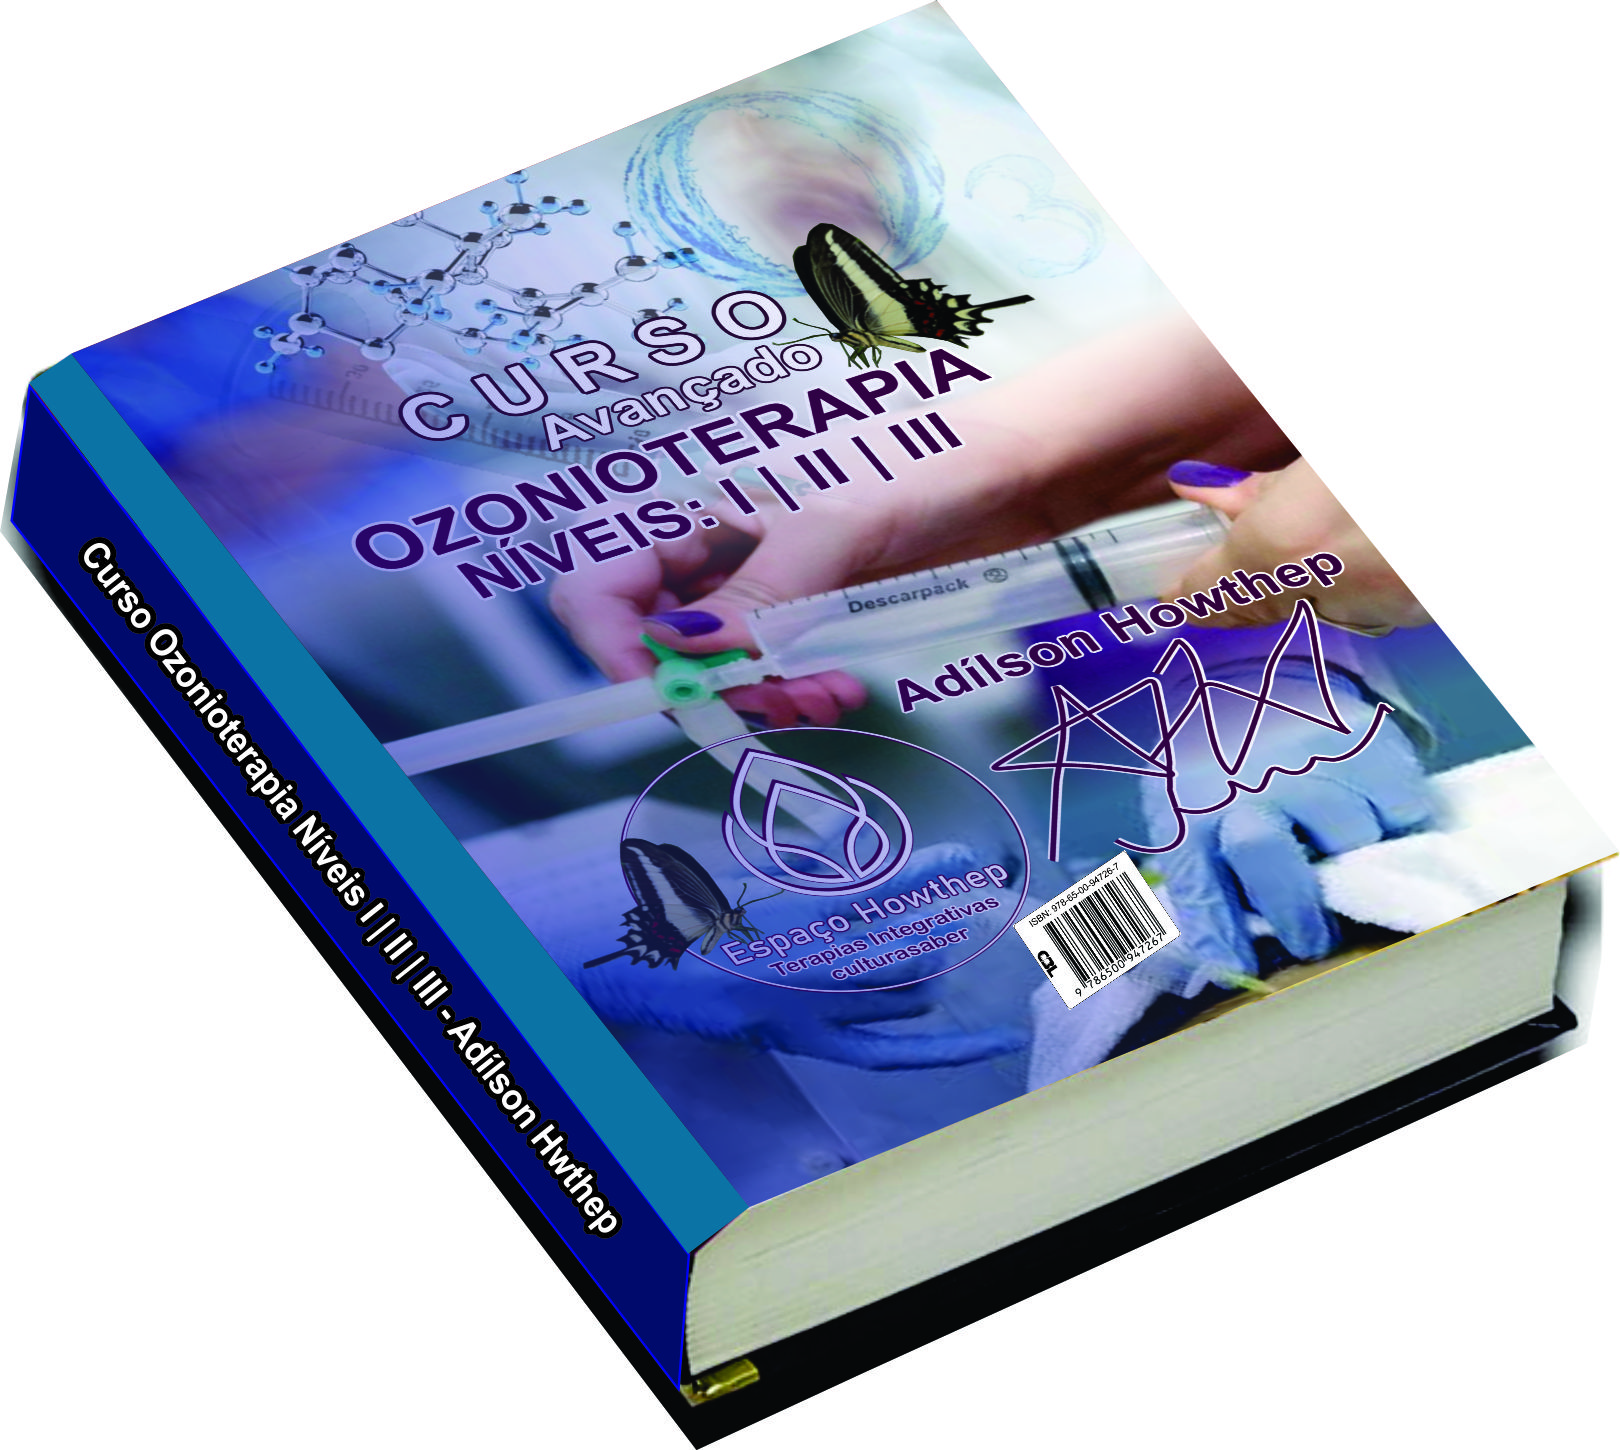 Ozonioterapia https://clubedeautores.com.br/livros/autores/adilson-howthep